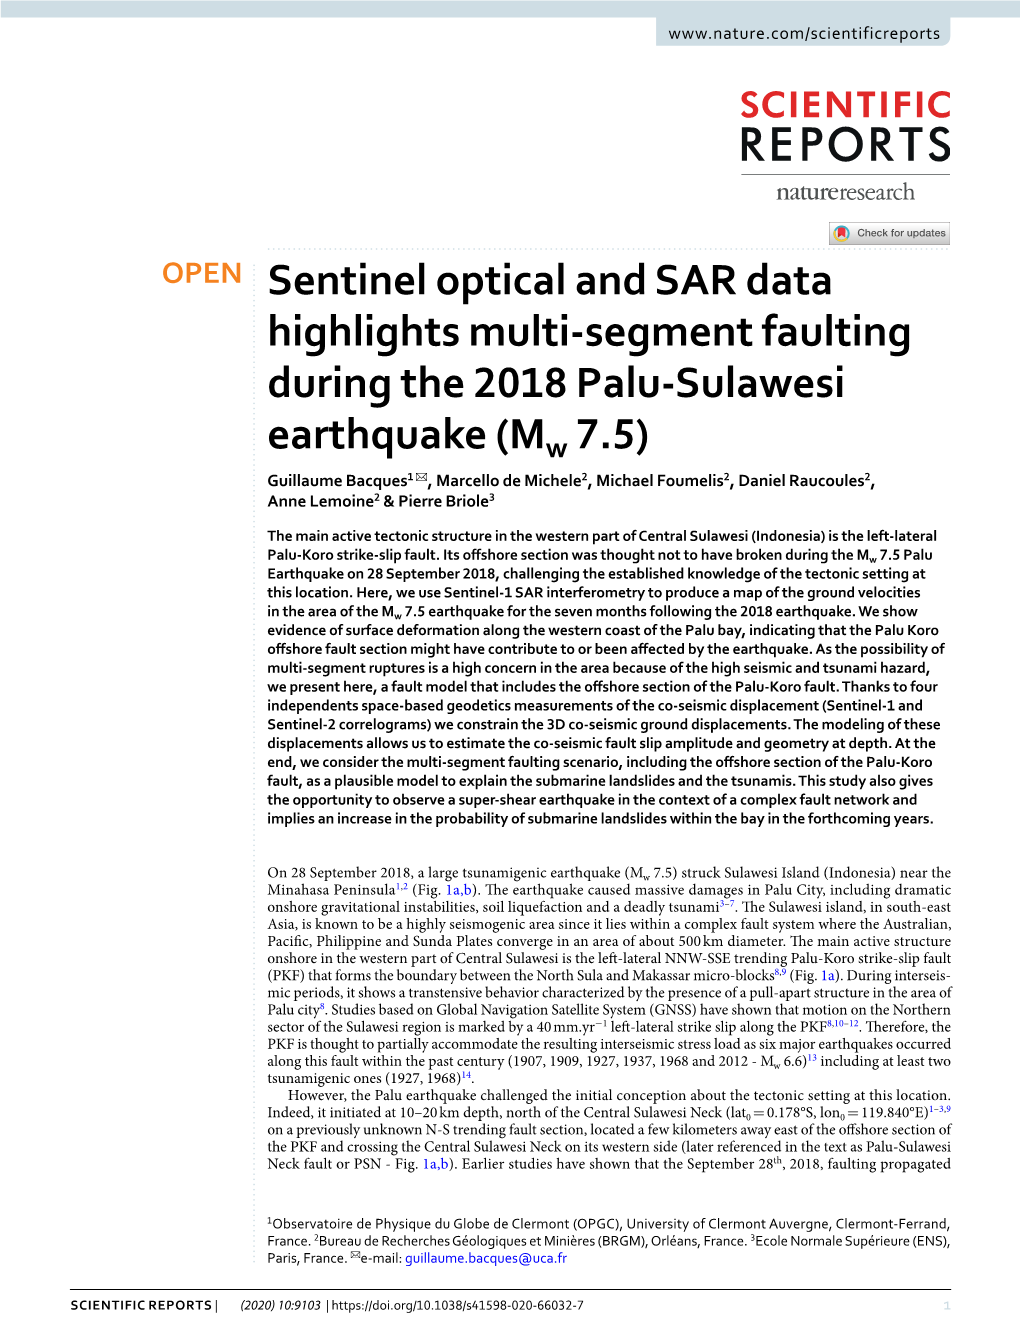 Sentinel Optical and SAR Data Highlights Multi-Segment